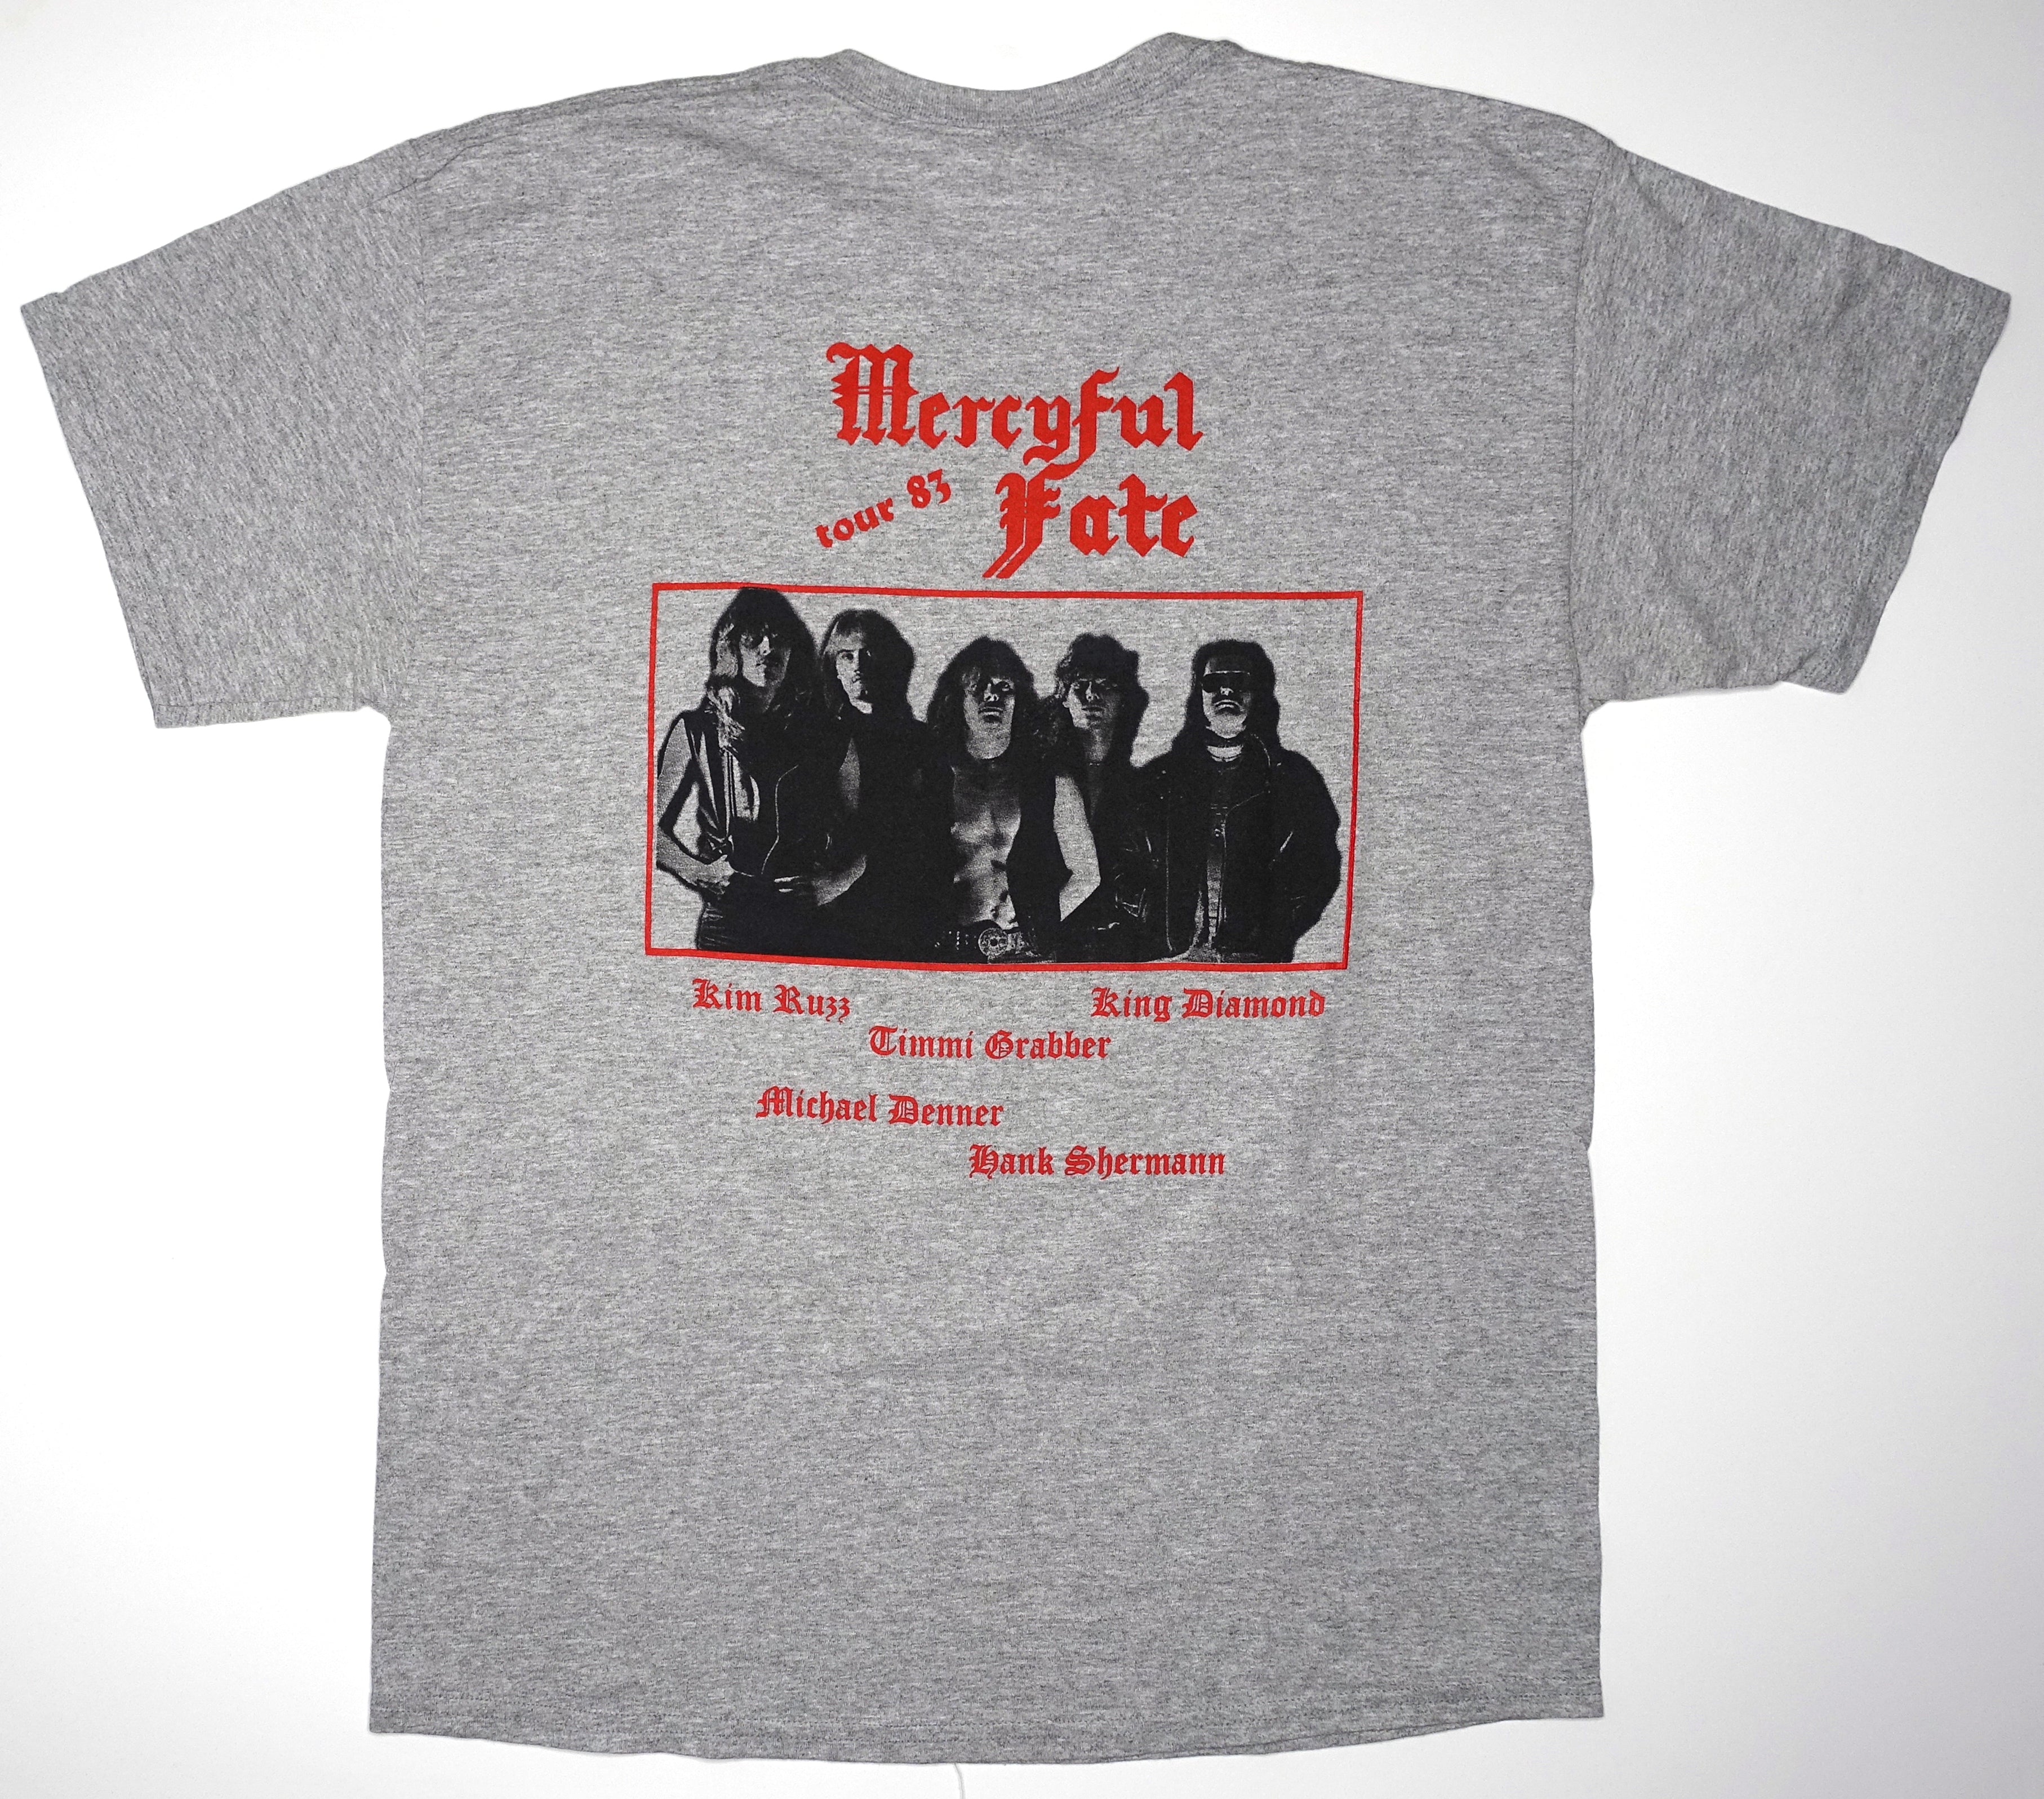 Mercyful Fate – Melissa 83 Tour Shirt Size Large (Bootleg)